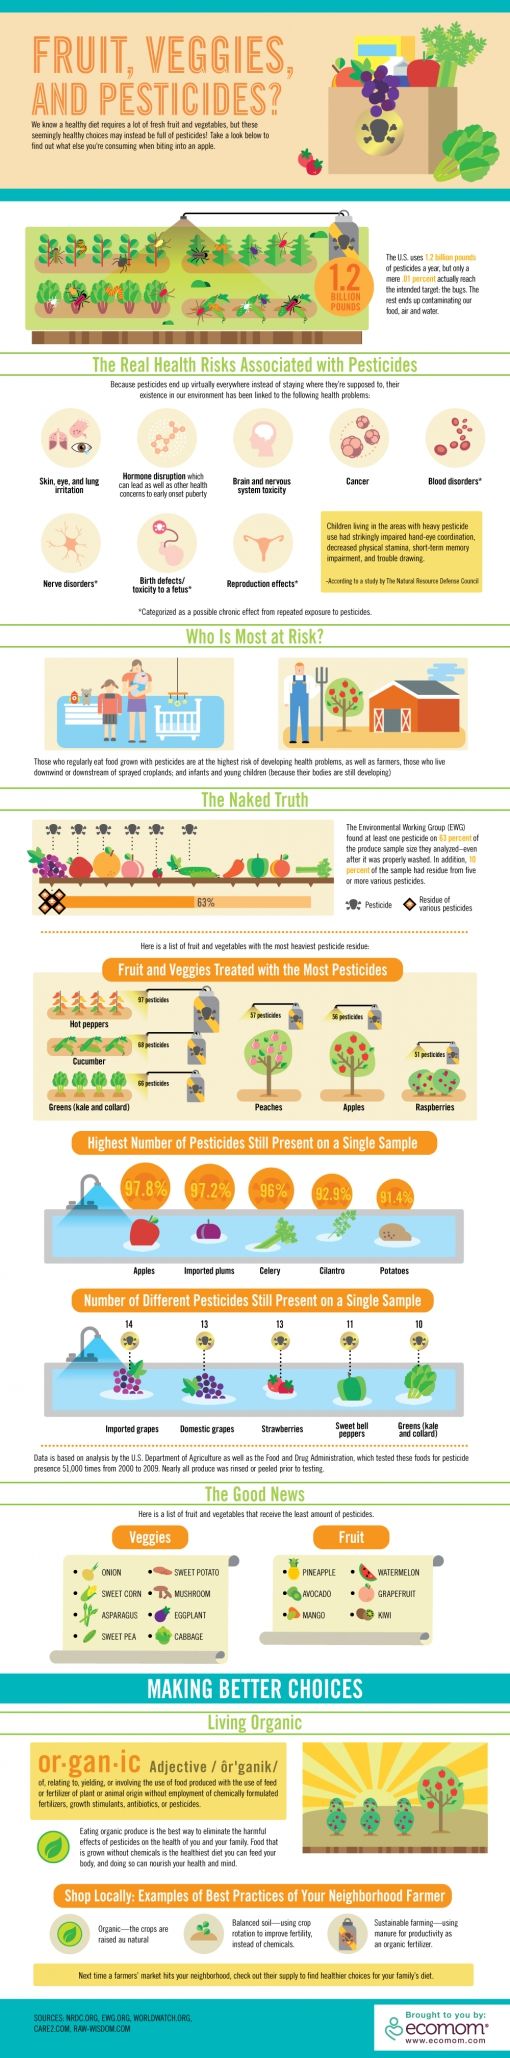 infographic-pesticides2.jpg